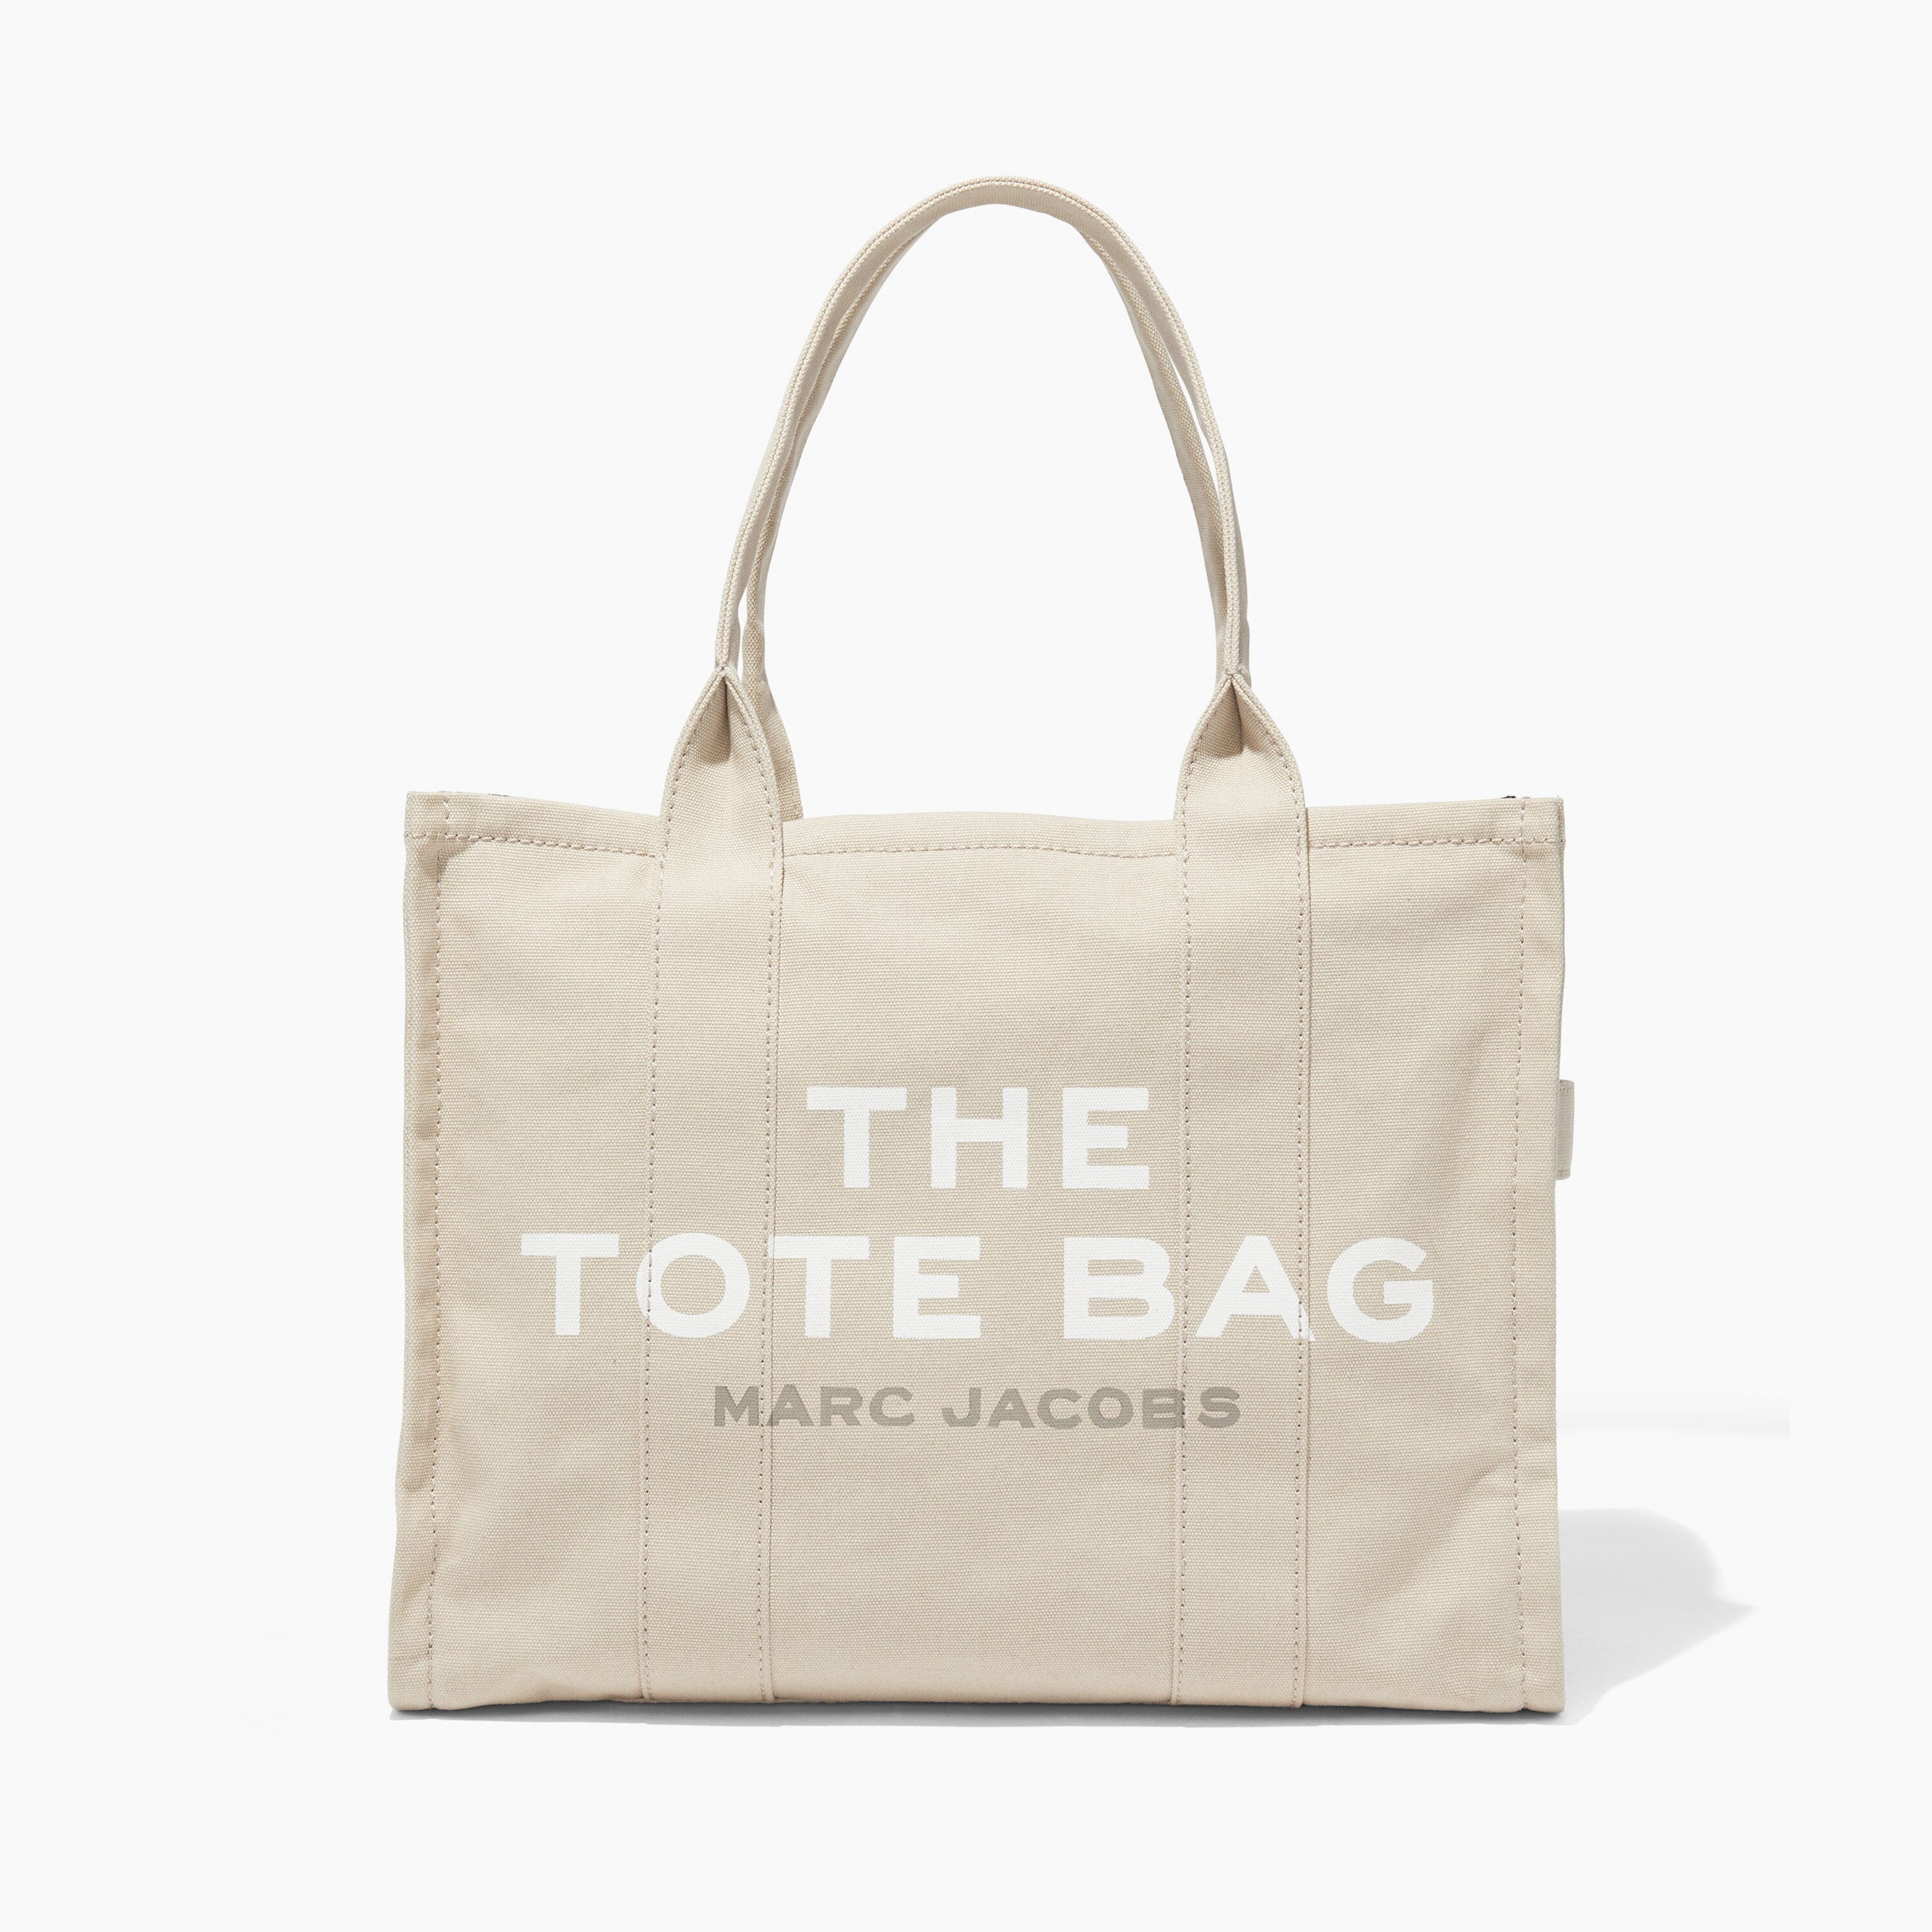 MARC JACOBS - M0016156-260 - The Large Tote Bag - Beige Borse Marc Jacobs 